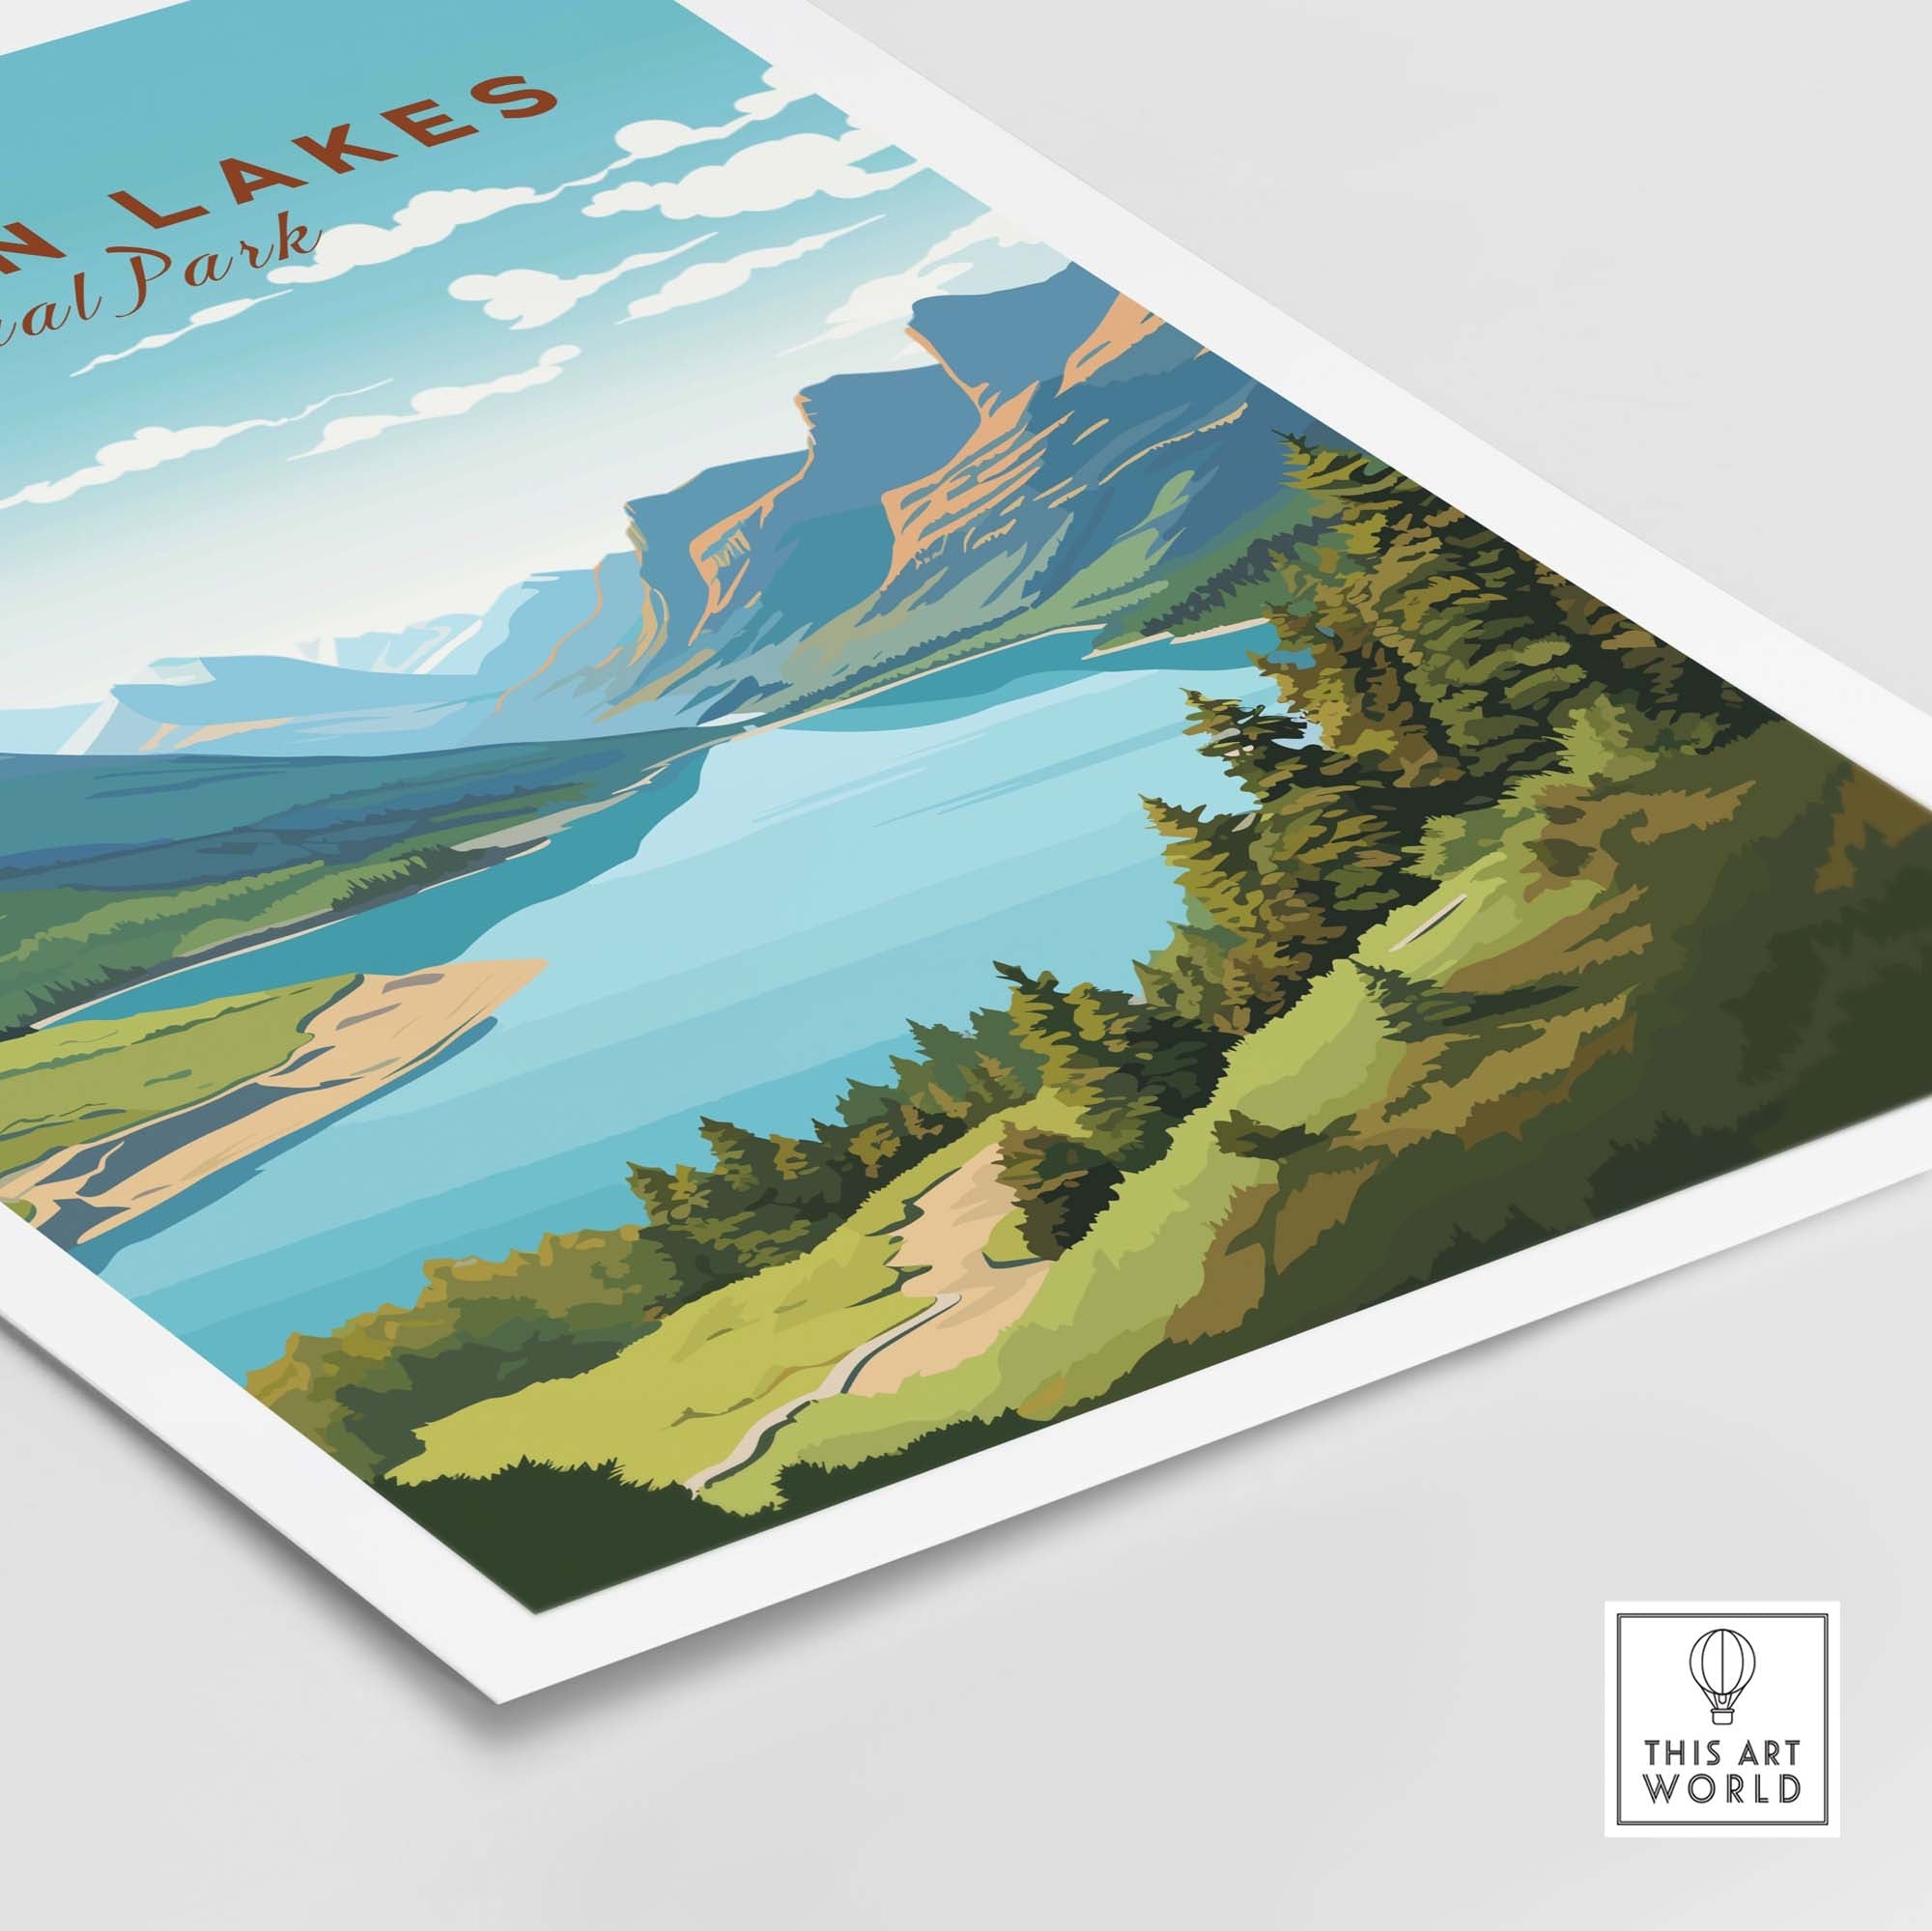 Waterton Lakes National Park Poster